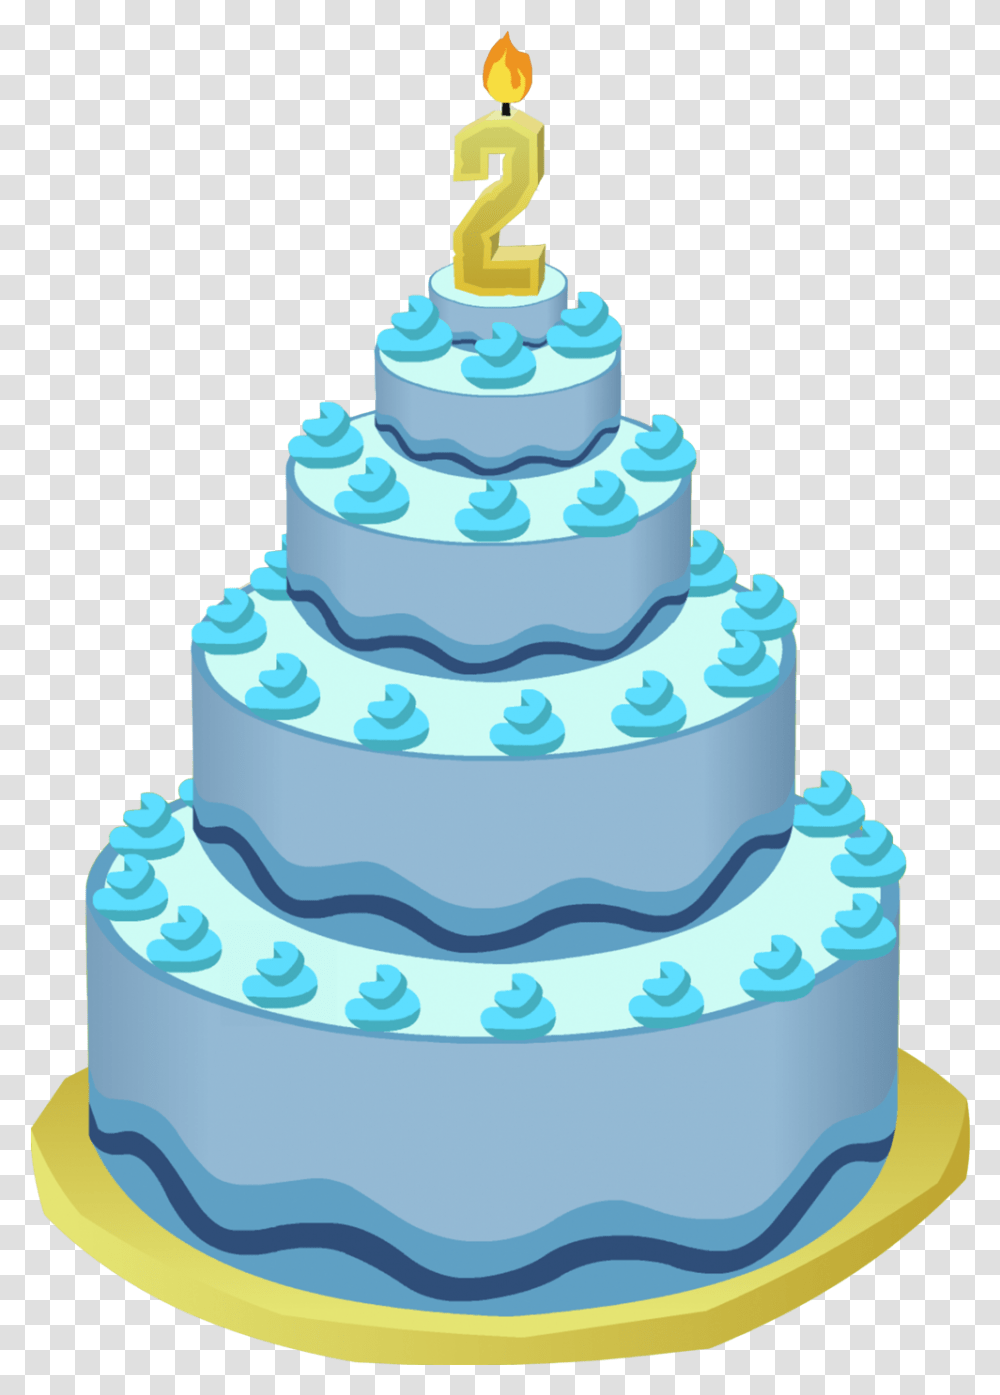 Birthday Cake Assset Pack - Animal Jam Archives 2nd Birthday Cake Hd, Dessert, Food, Wedding Cake, Icing Transparent Png